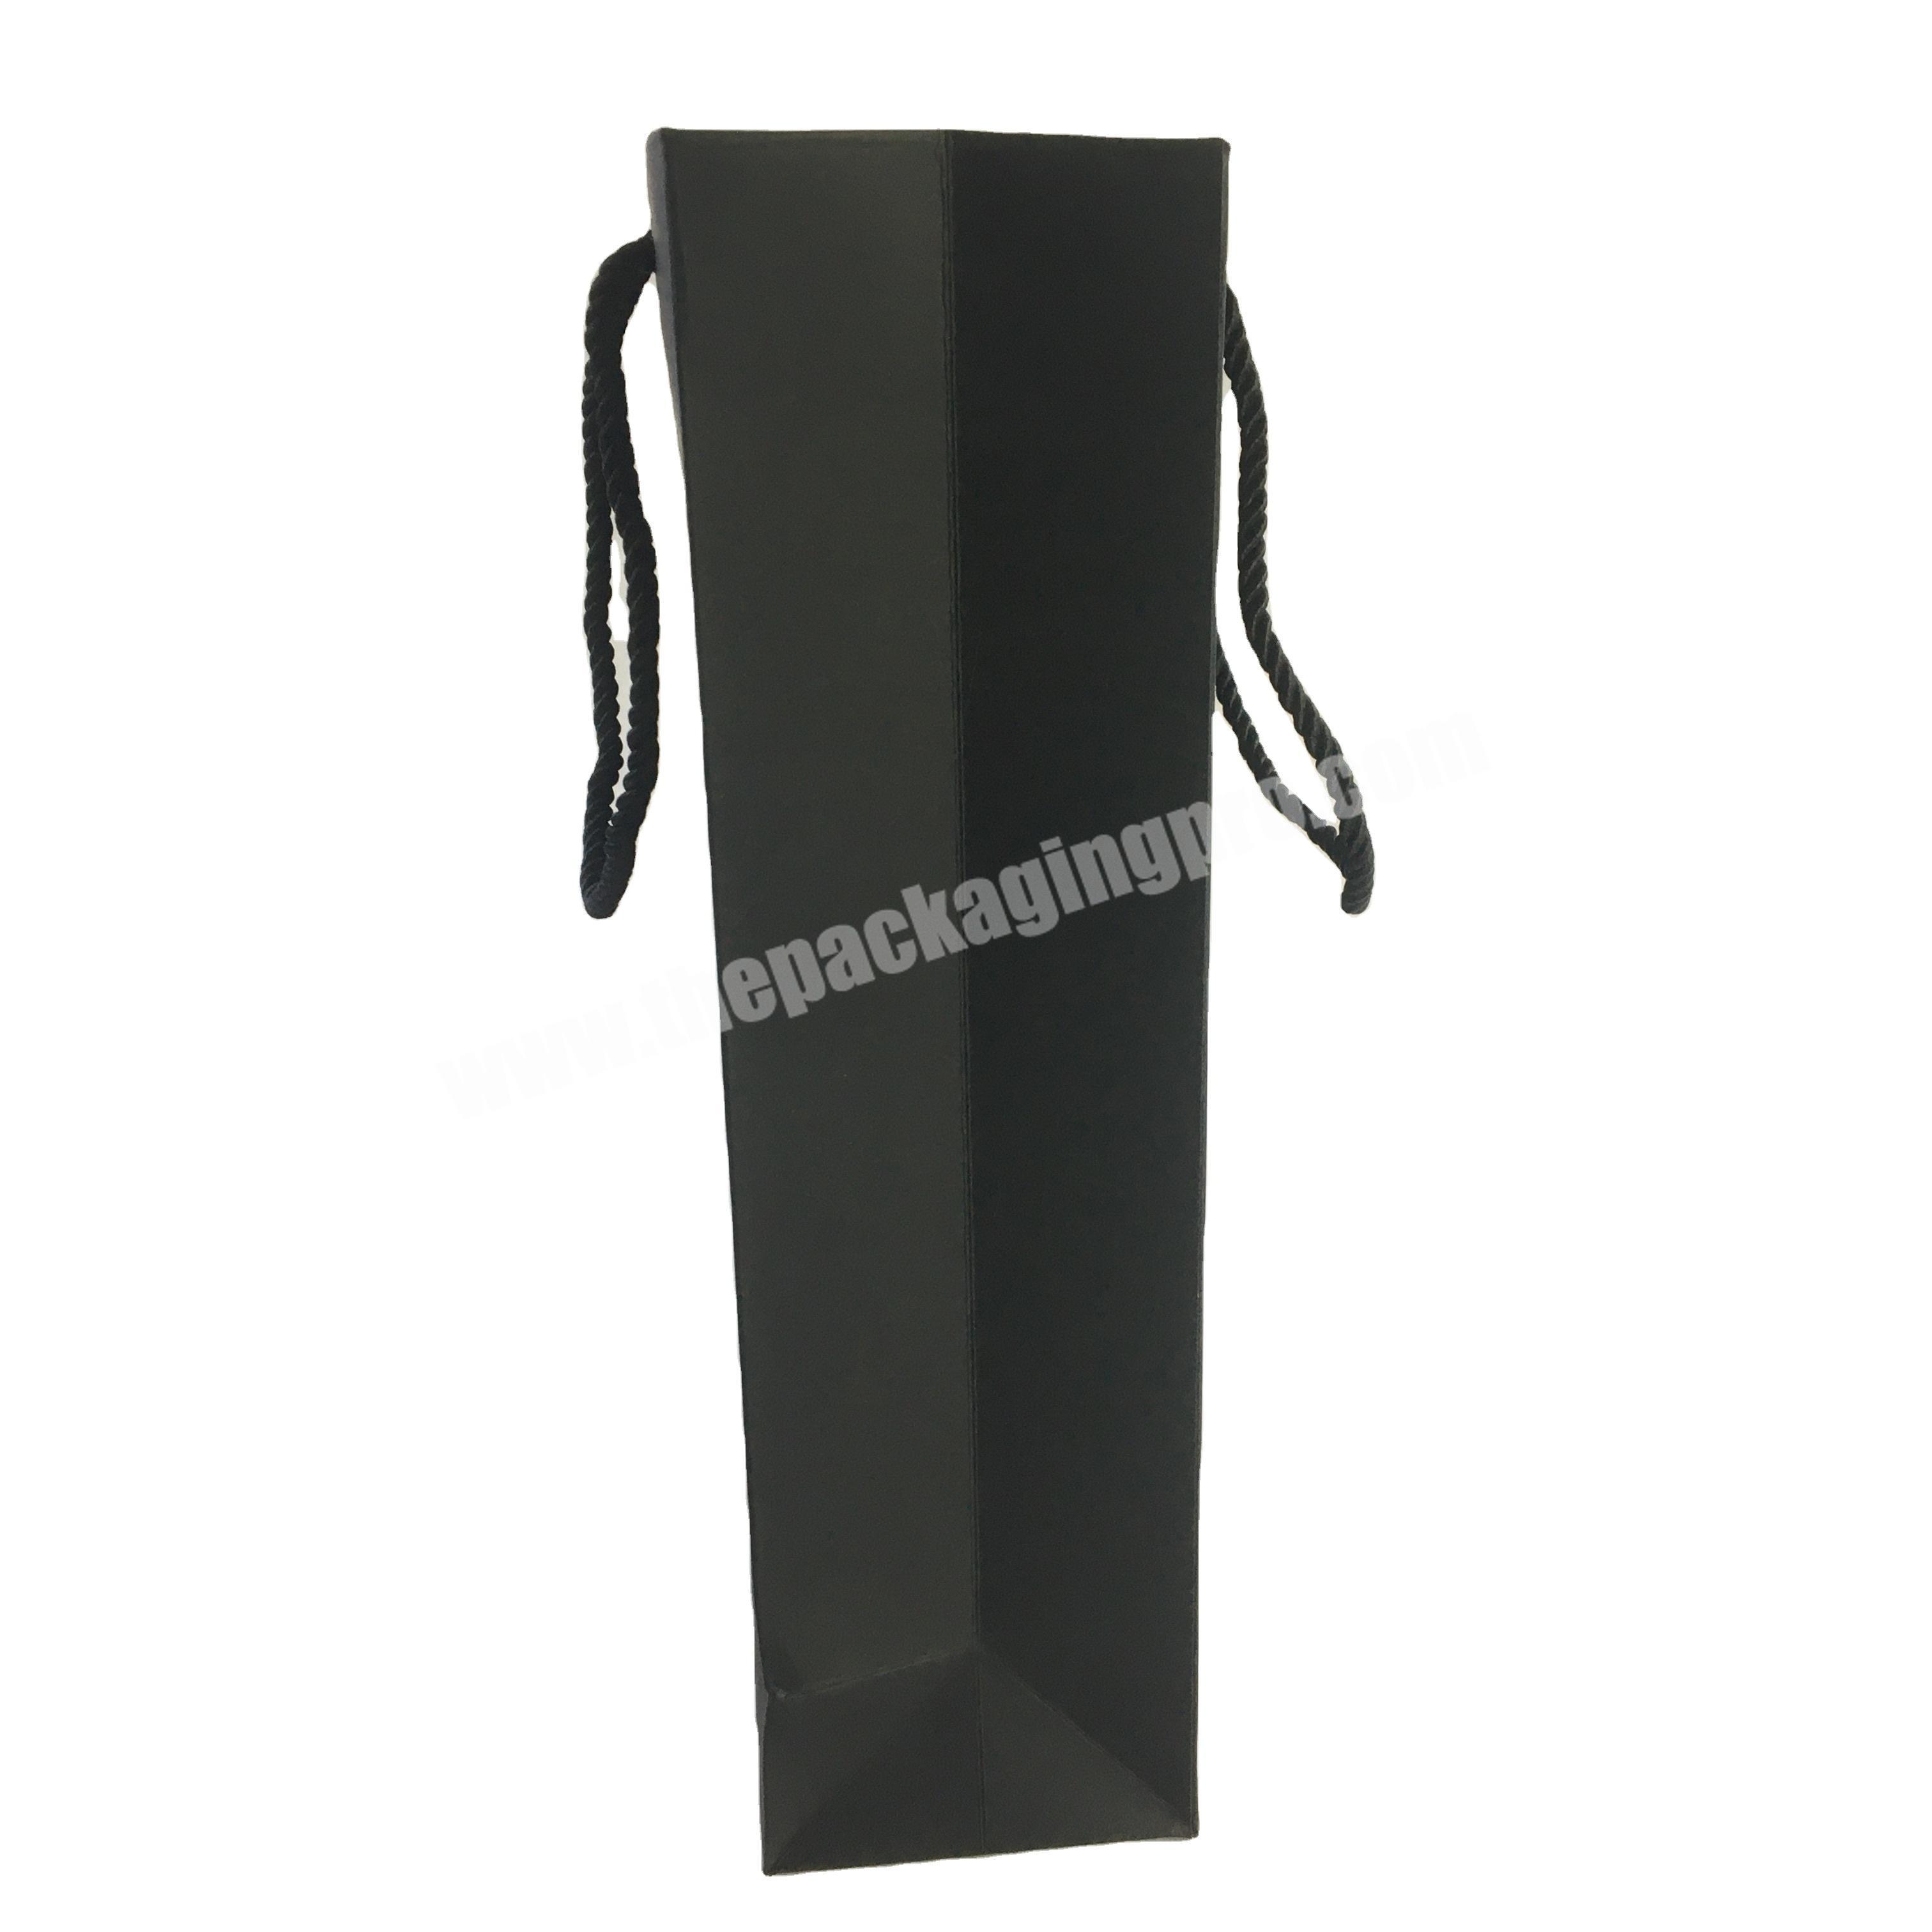 Black luxury paper bag with handle